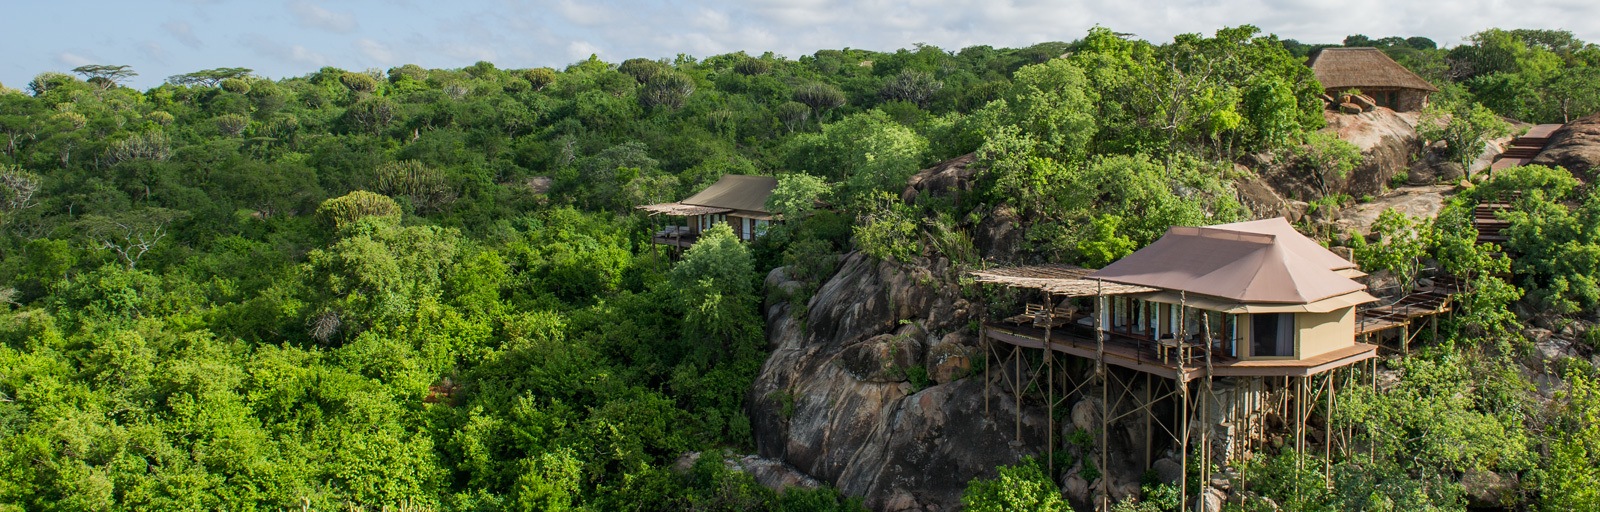 Mwiba Lodge, Serengeti, Tanzania